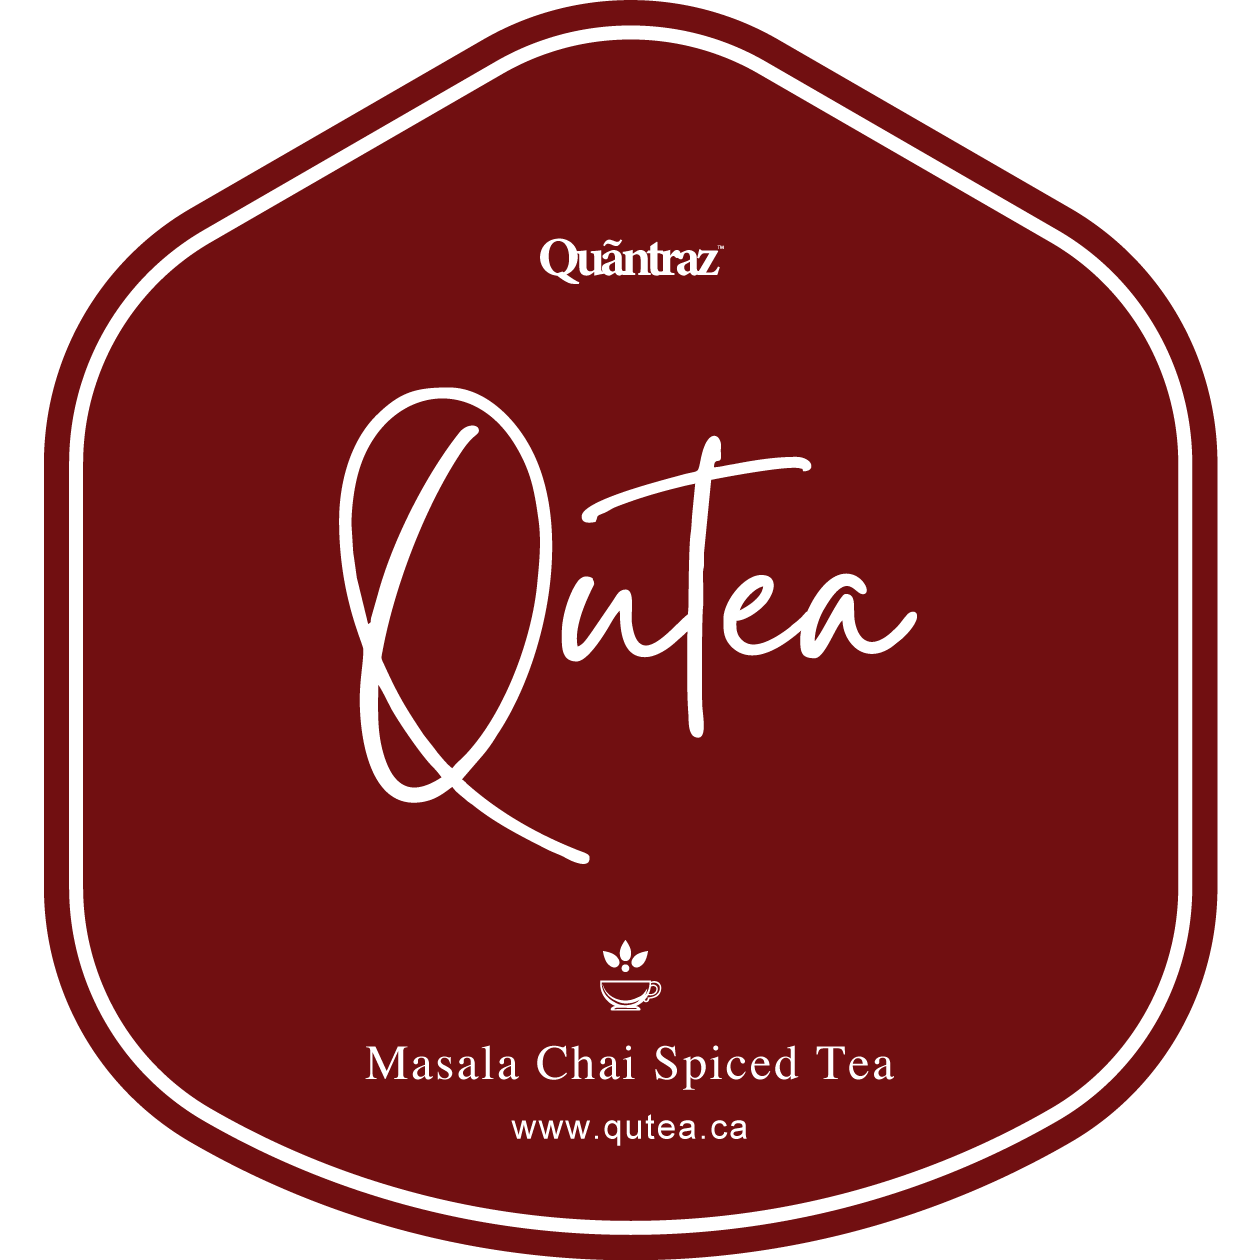 Masala Chai Spiced Tea